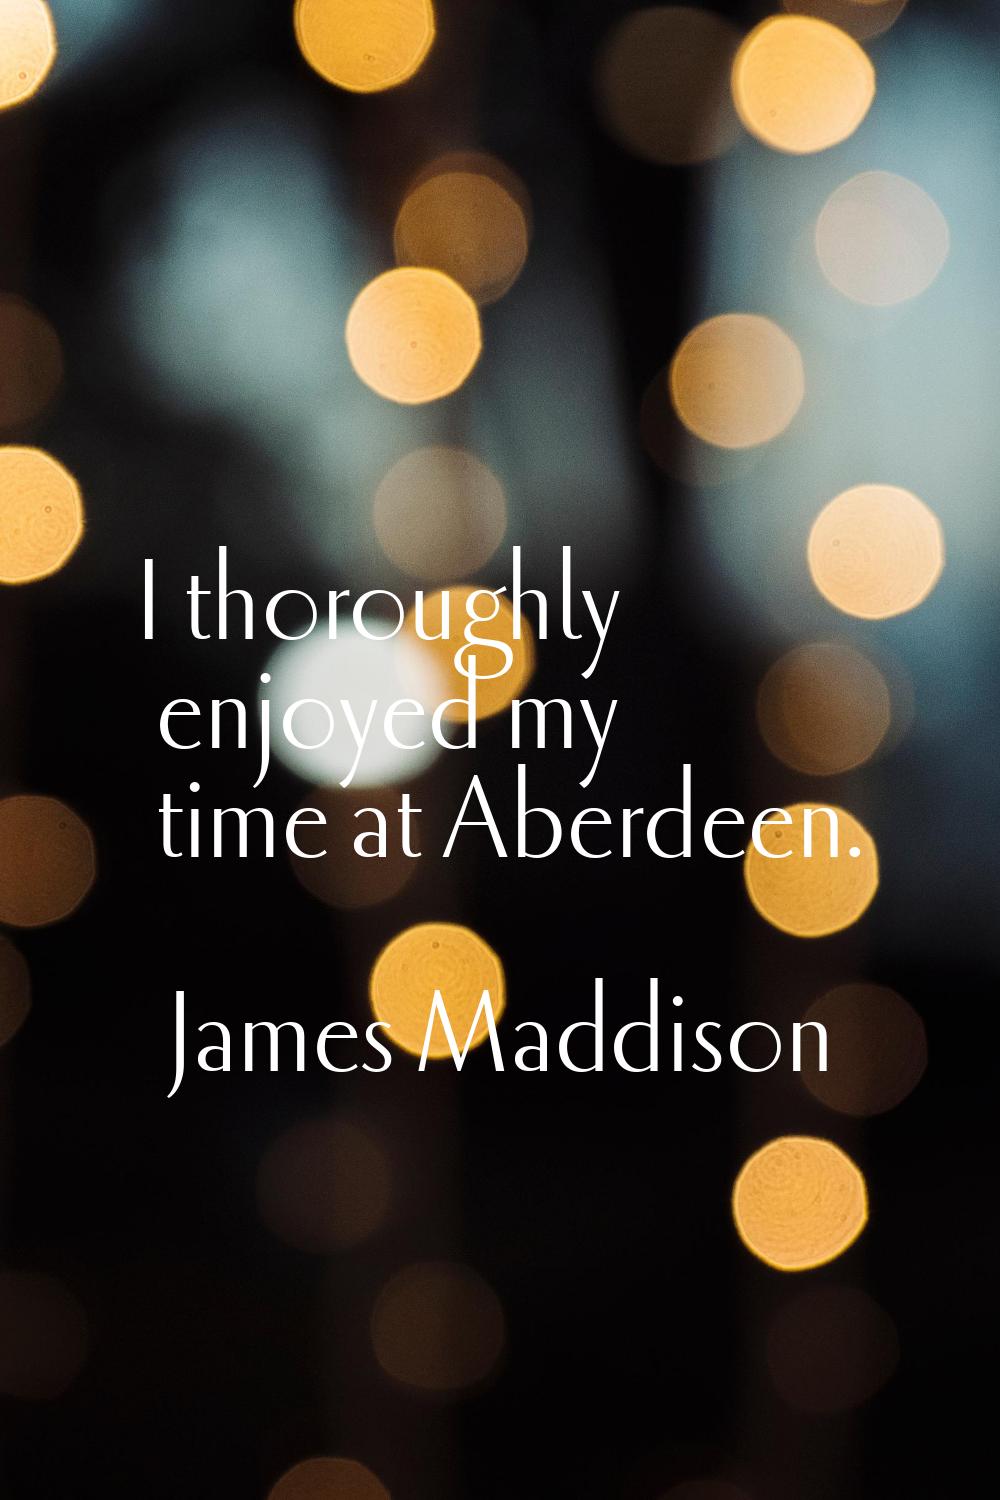 I thoroughly enjoyed my time at Aberdeen.